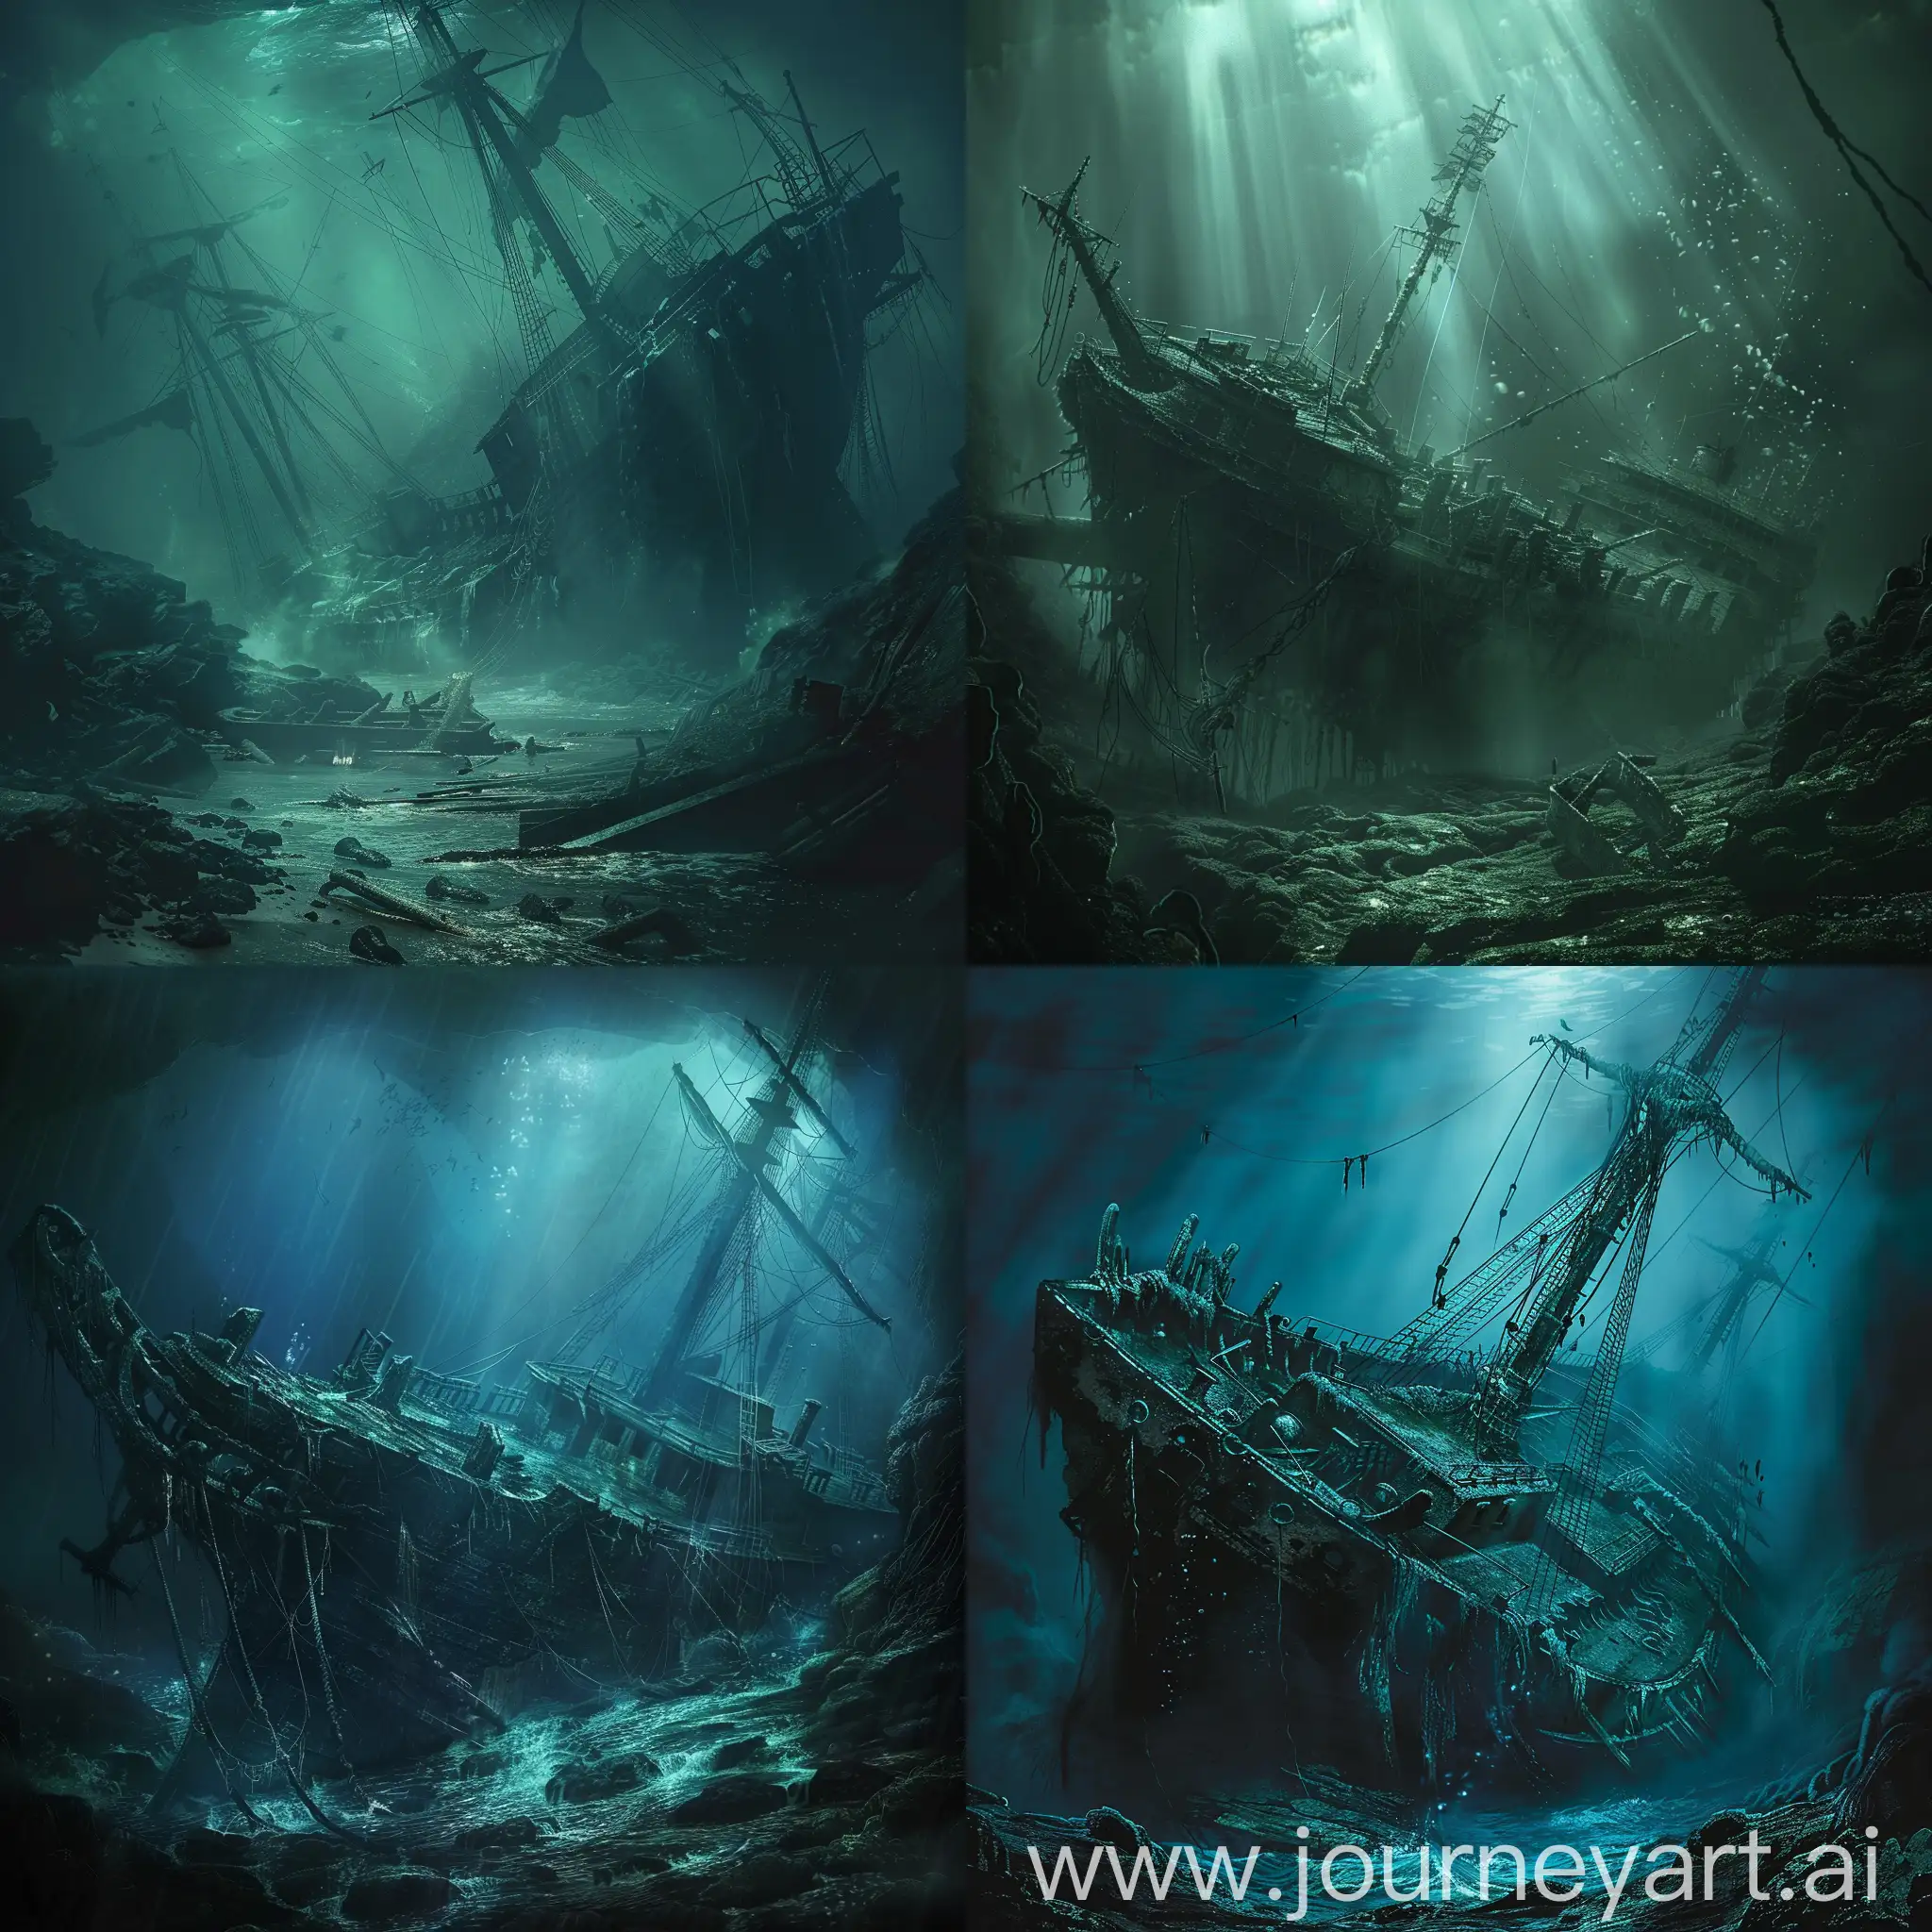 amazing illustration of a shipwreck underwater, moody scene, fantastic shipwreck image